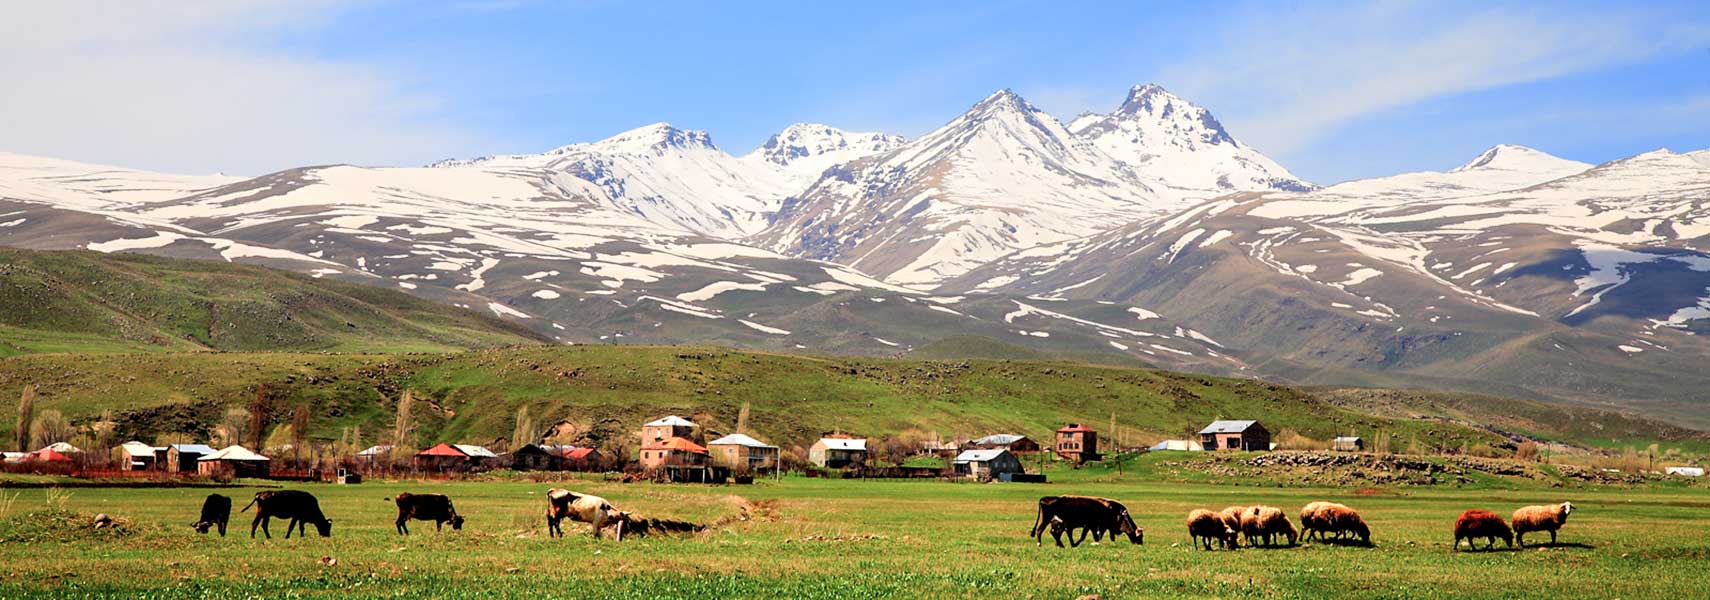 Mount Aragats, Armenia